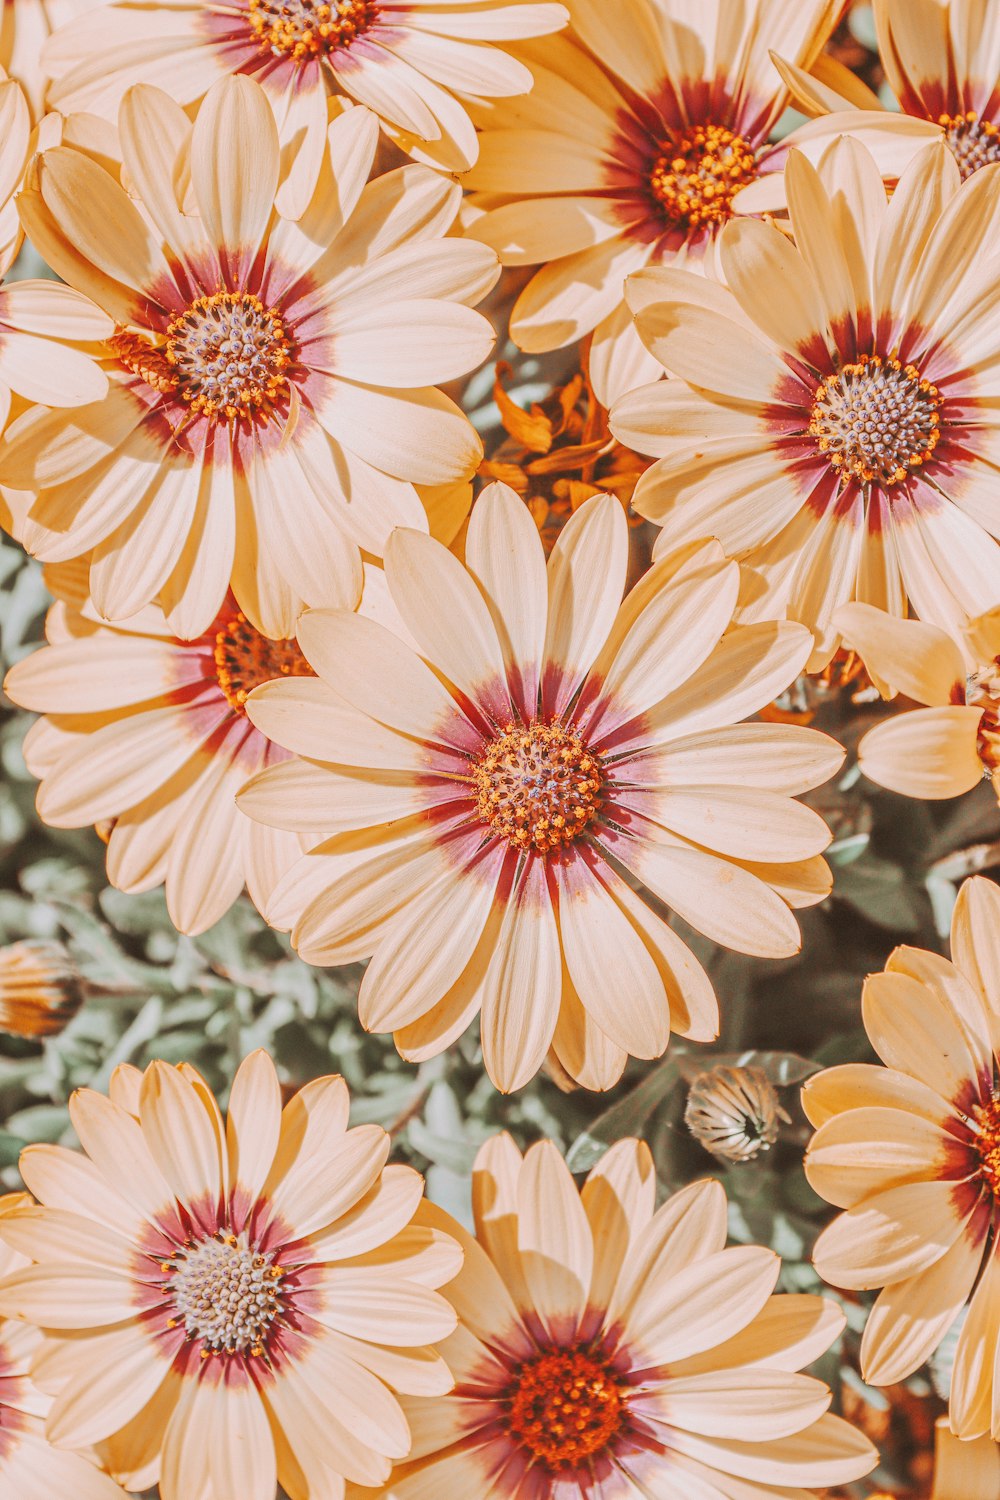 Flower Wallpaper Pictures | Download Free Images on Unsplash